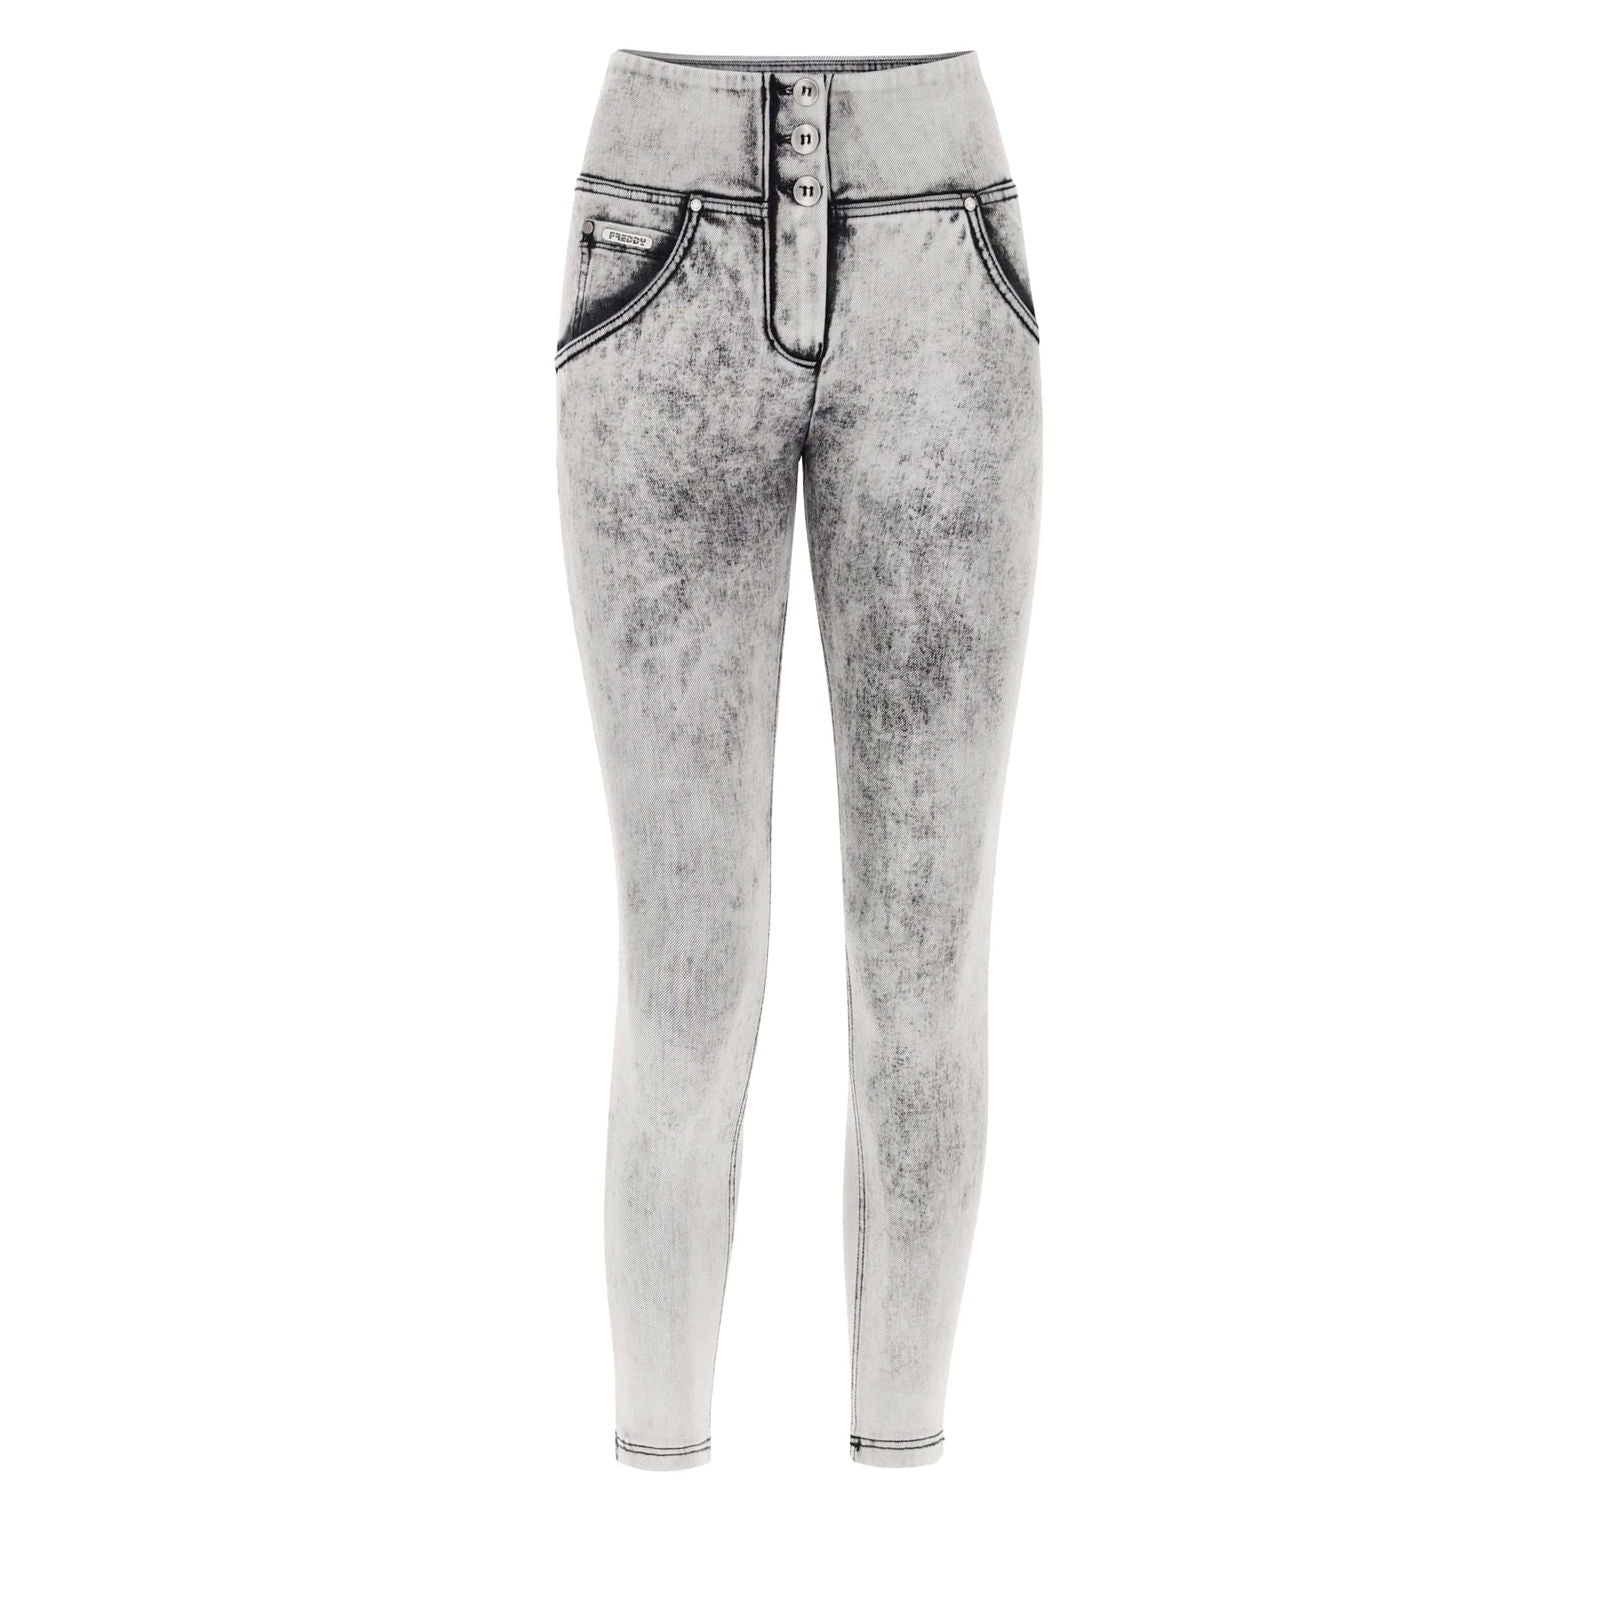 WR.UP® SNUG Jeans - High Waisted - 7/8 Length - Acid Wash Grey + Black Stitching 2